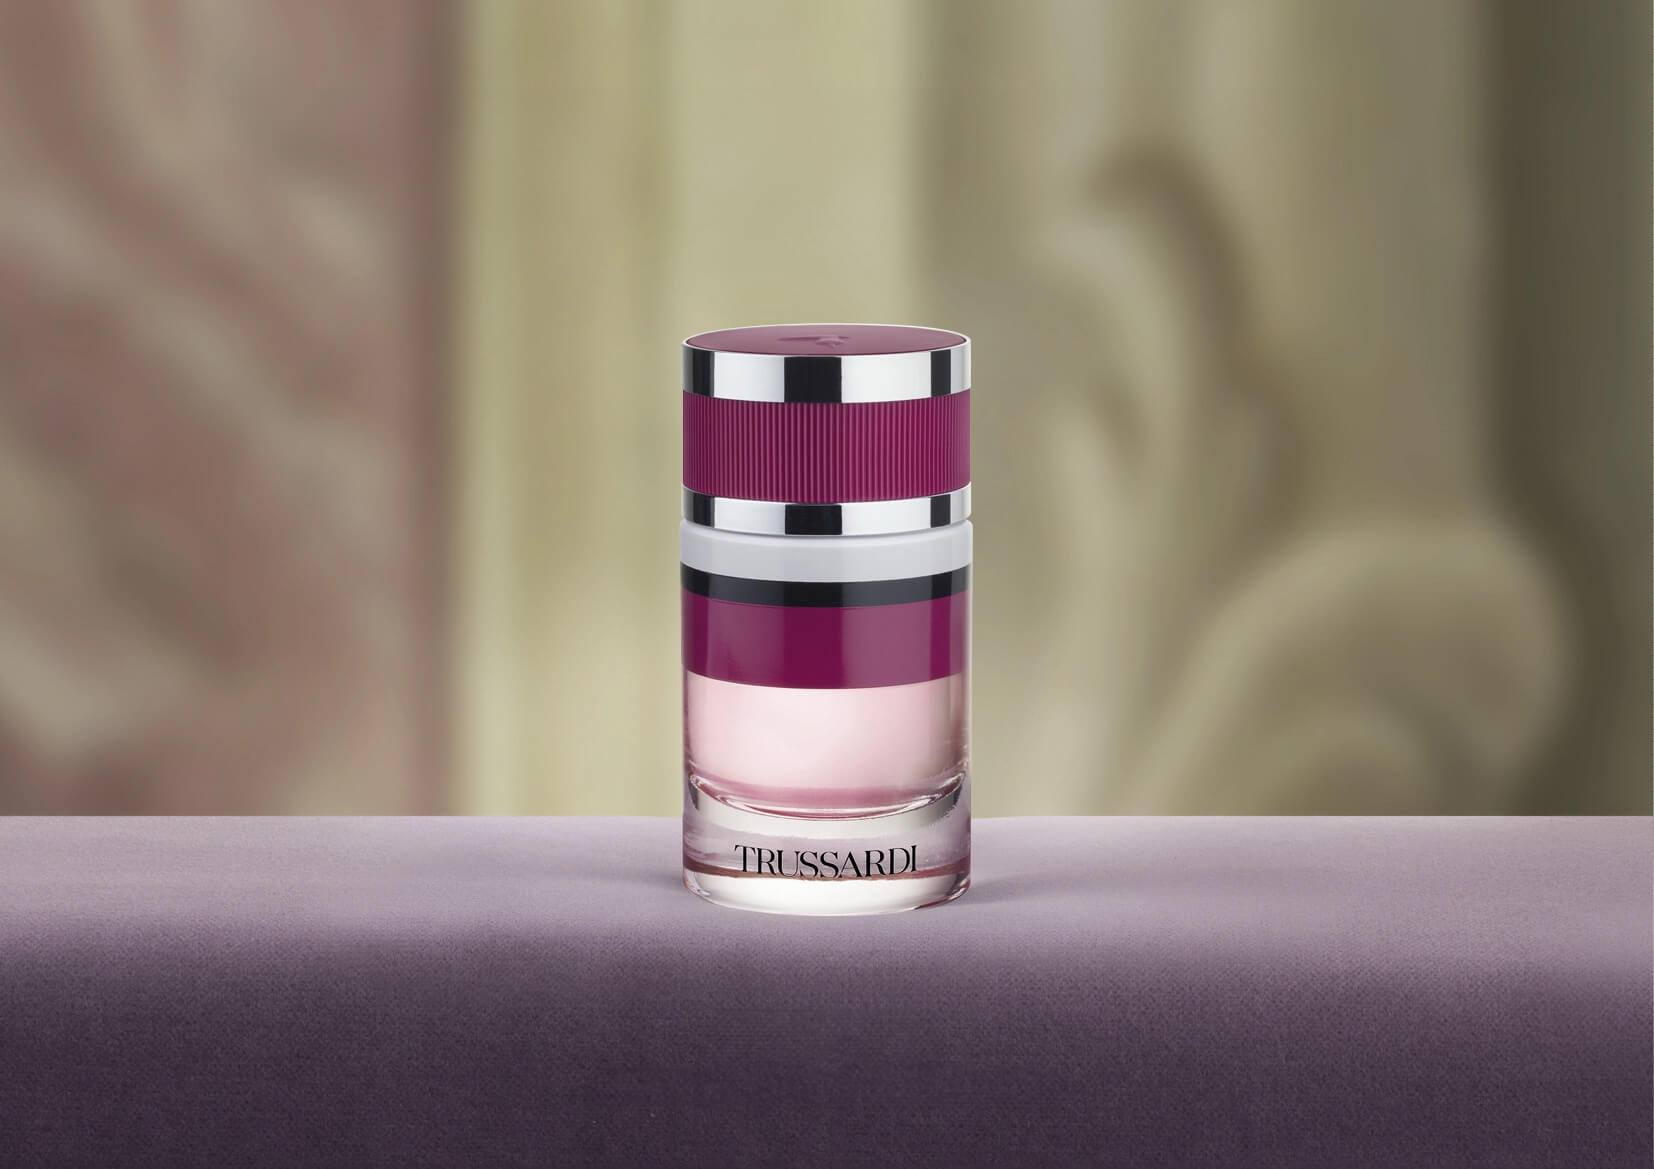 TRUSSARDI PURE JASMINE | The Feminine Fragrance